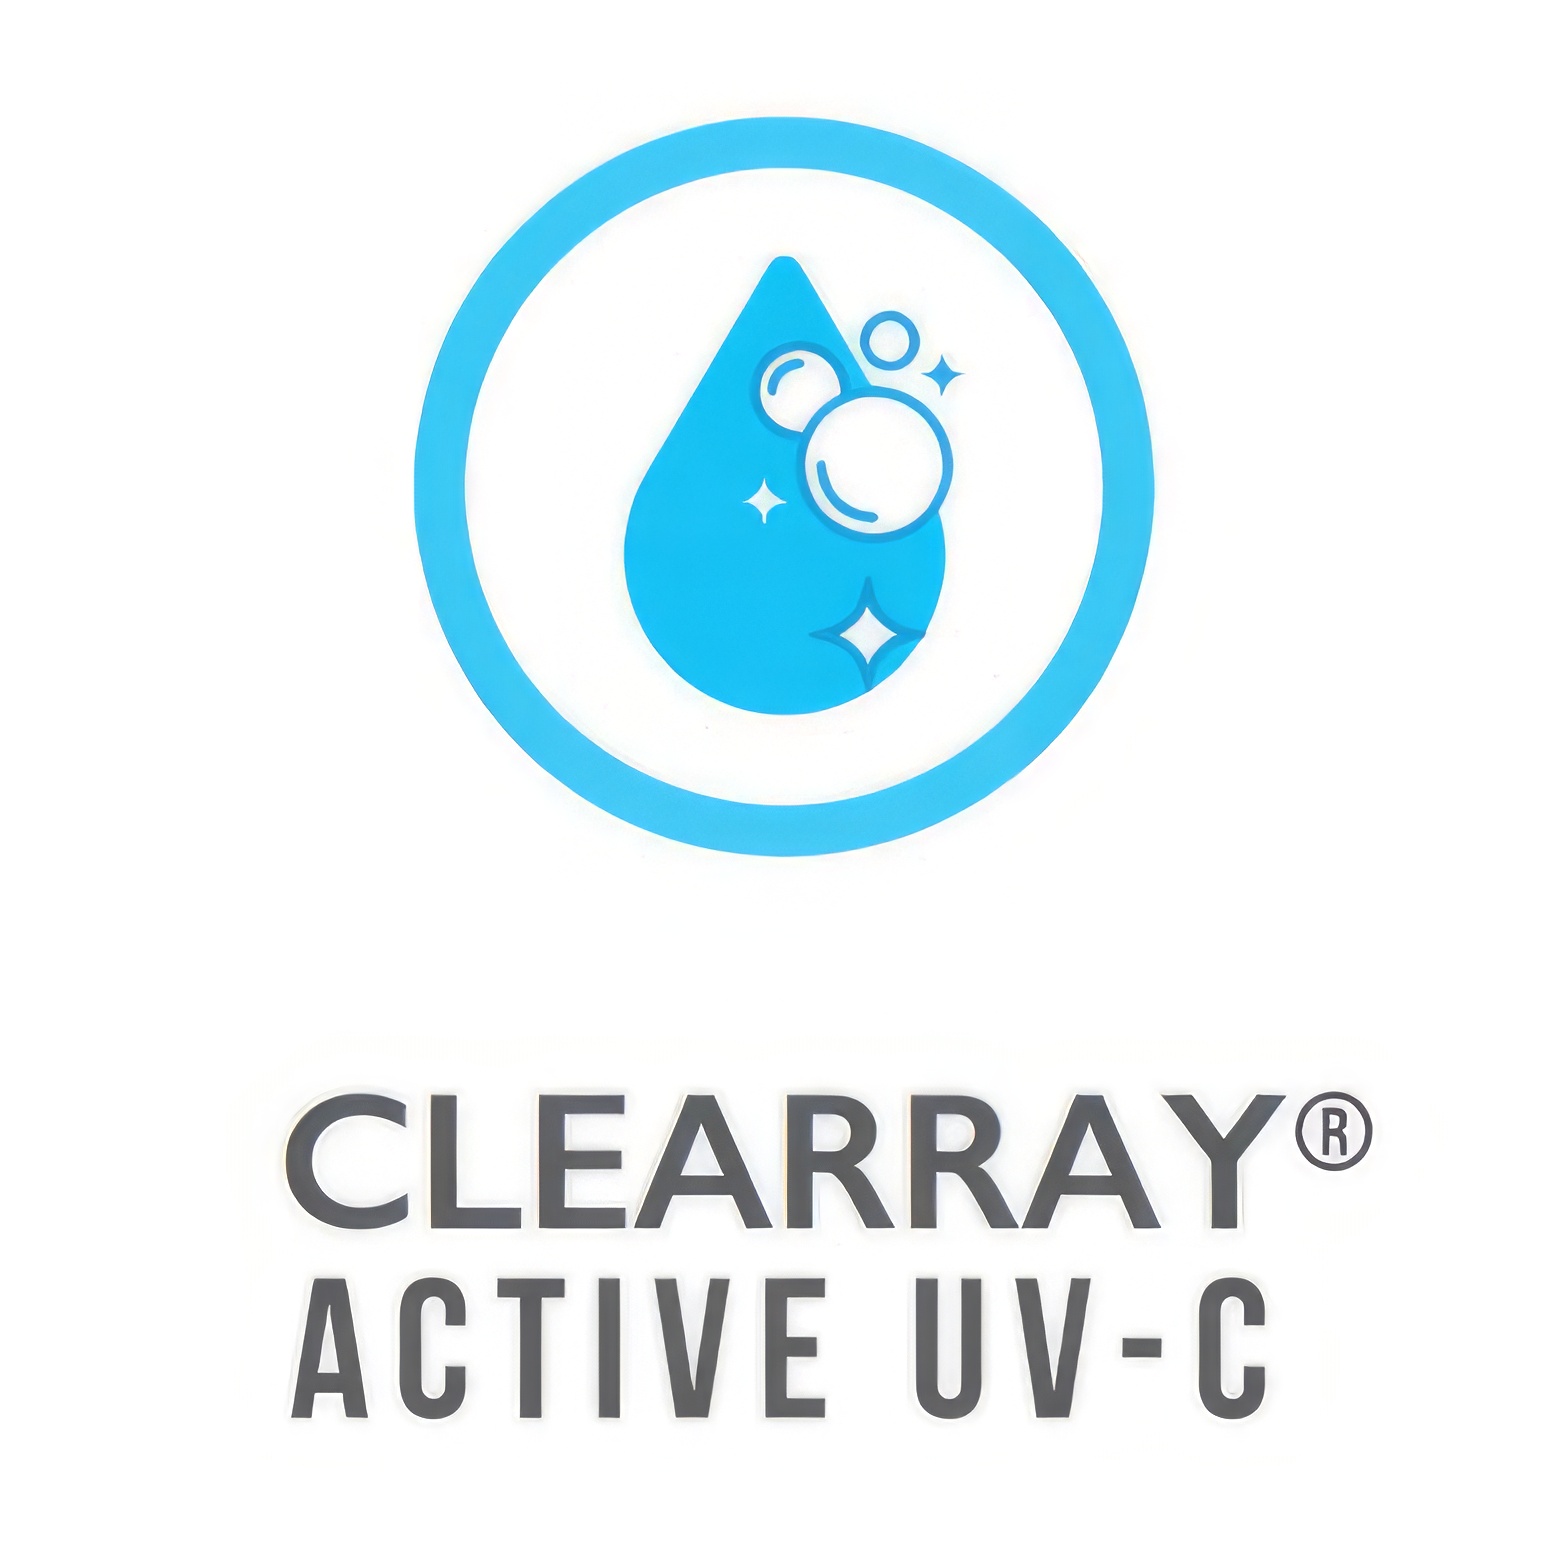 Clear ray active UV